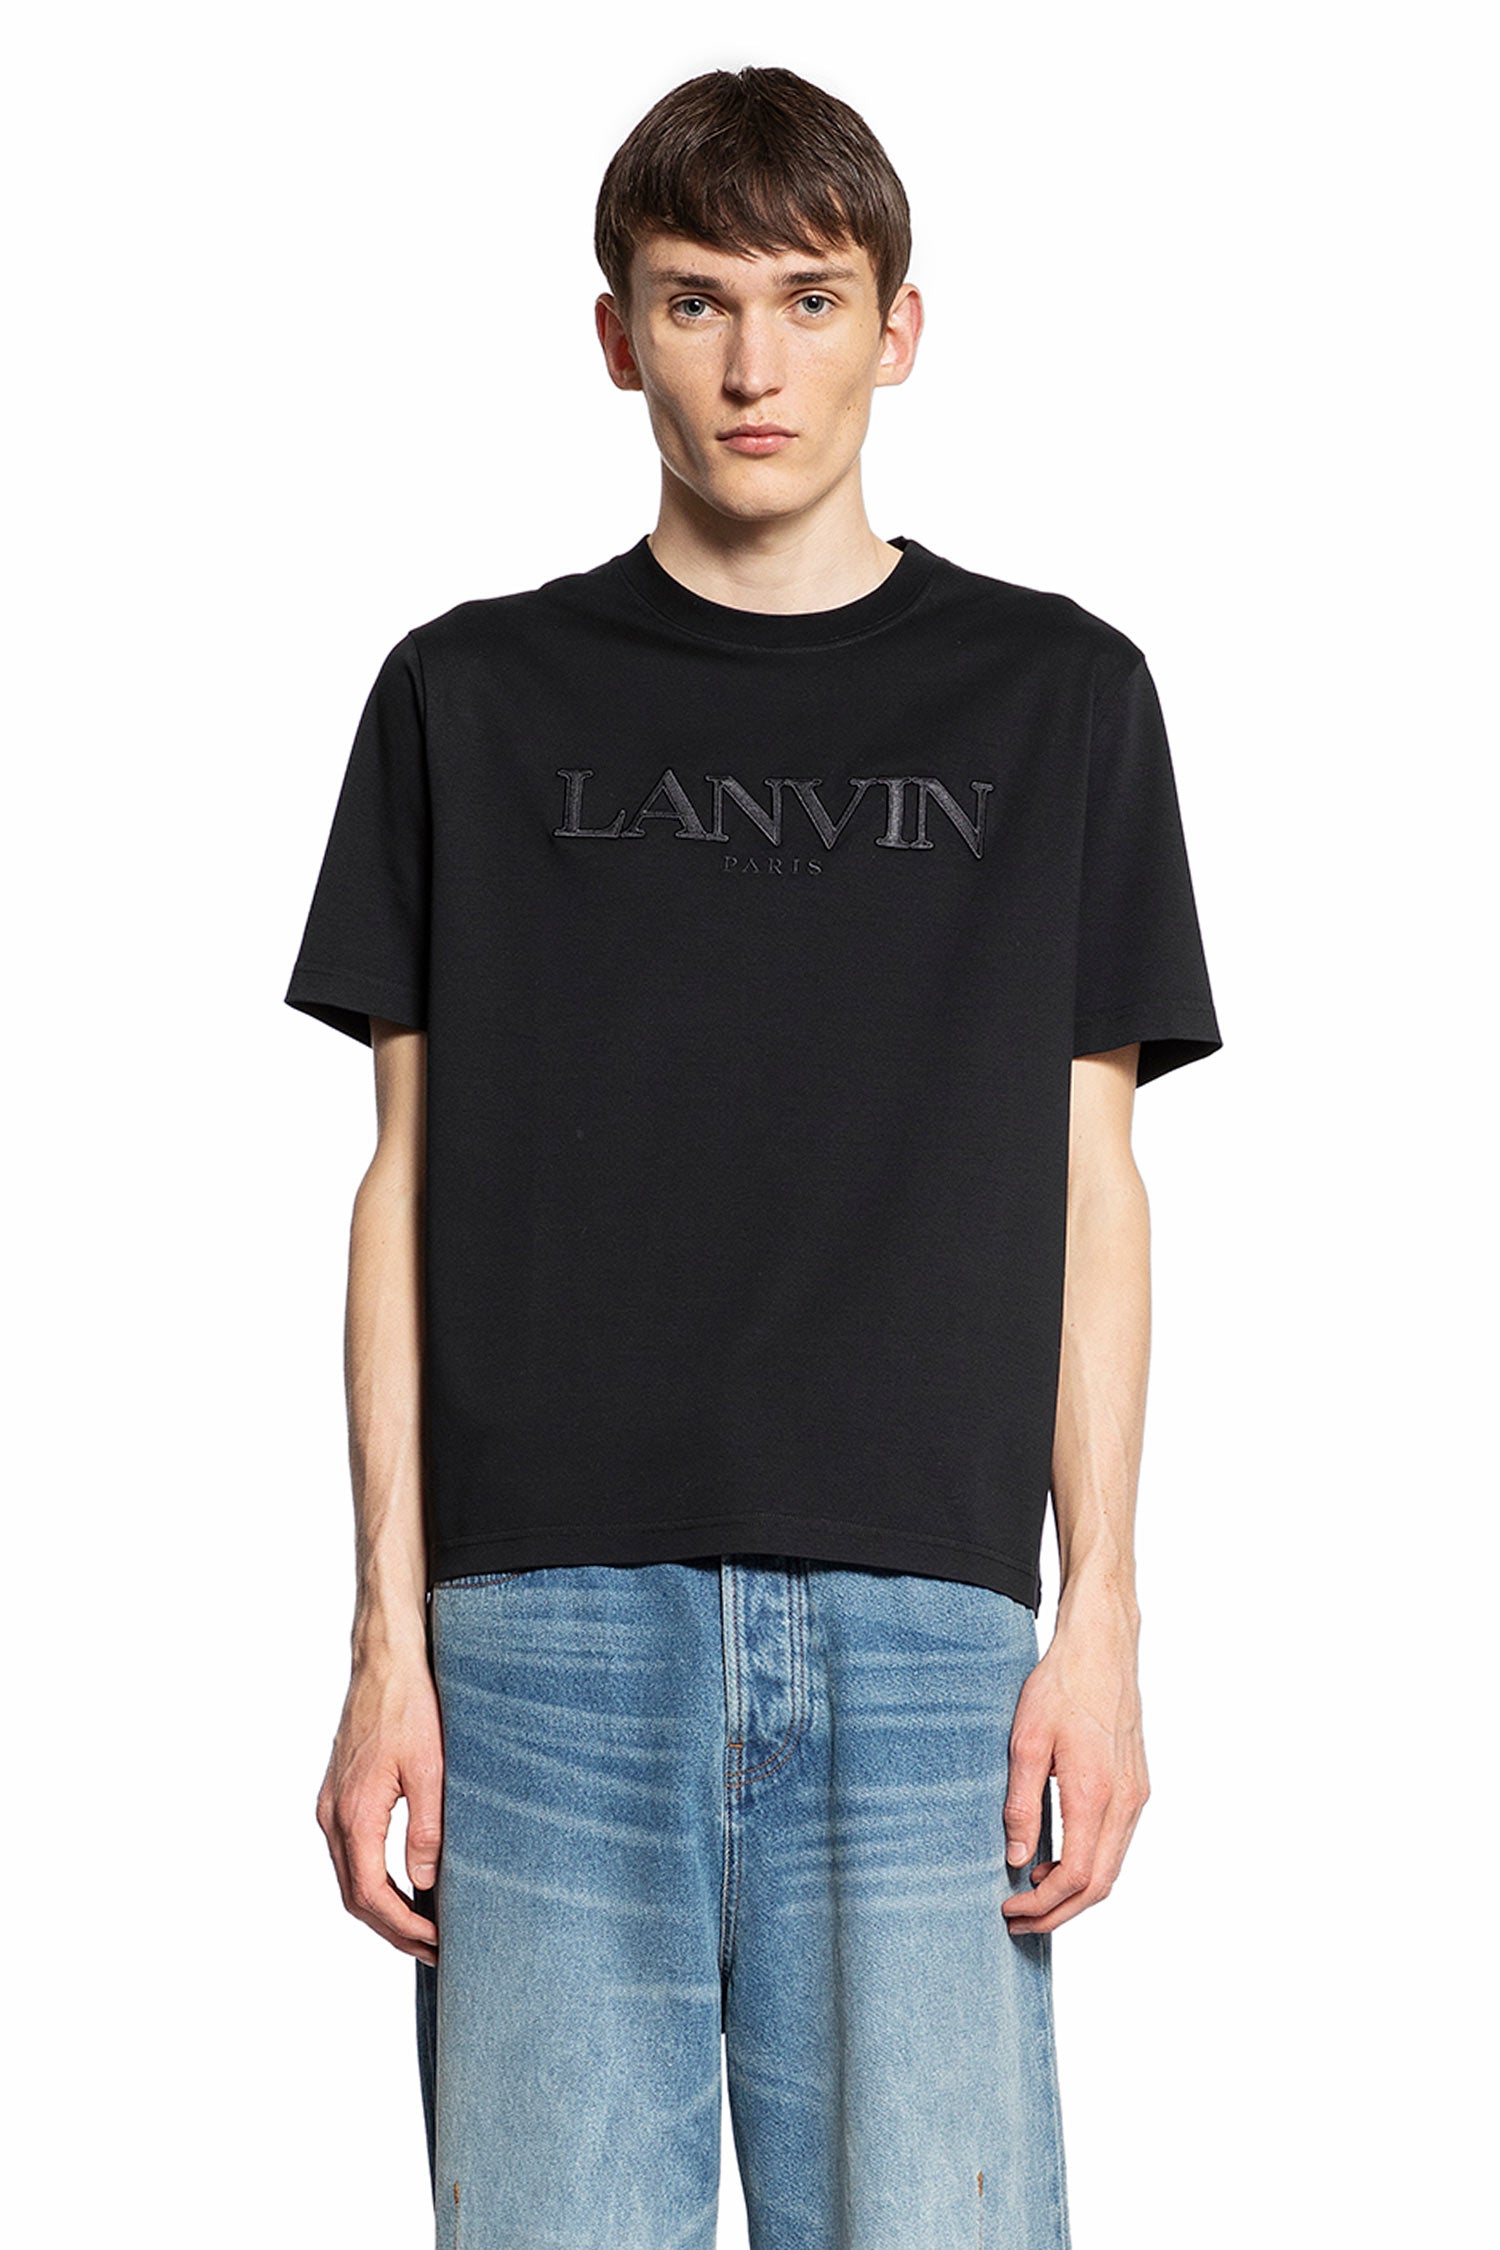 LANVIN MAN BLACK T-SHIRTS & TANK TOPS